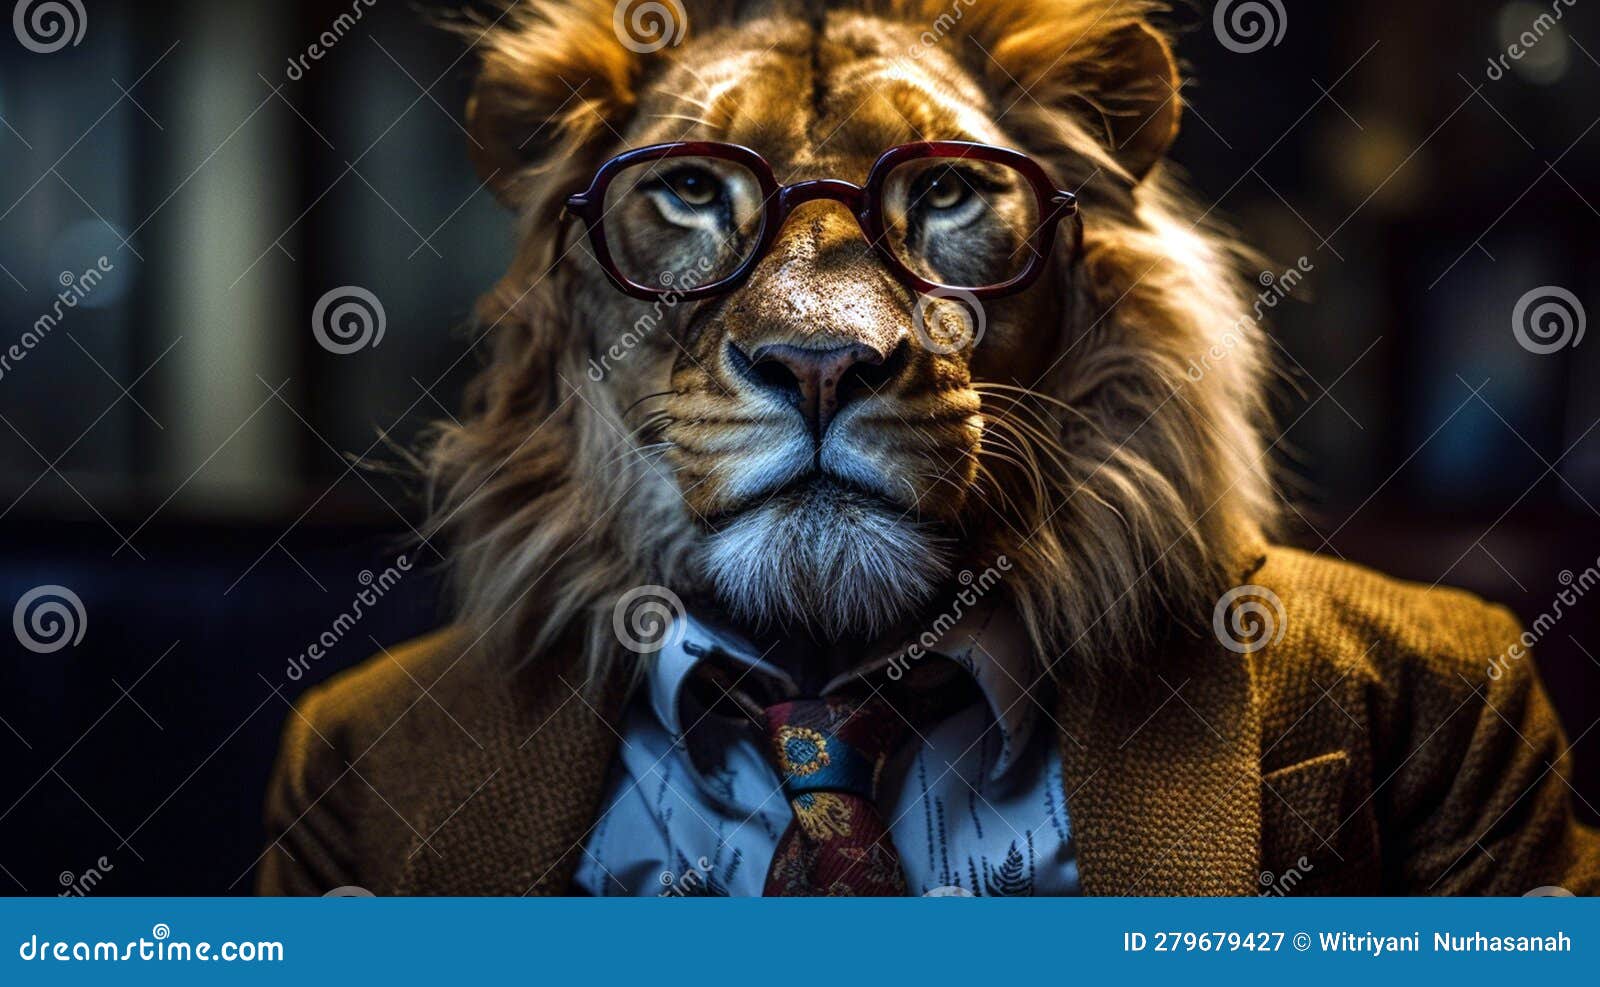 A Close-up Portrait of a Dapper Lion King Wearing a Sunglasses ...